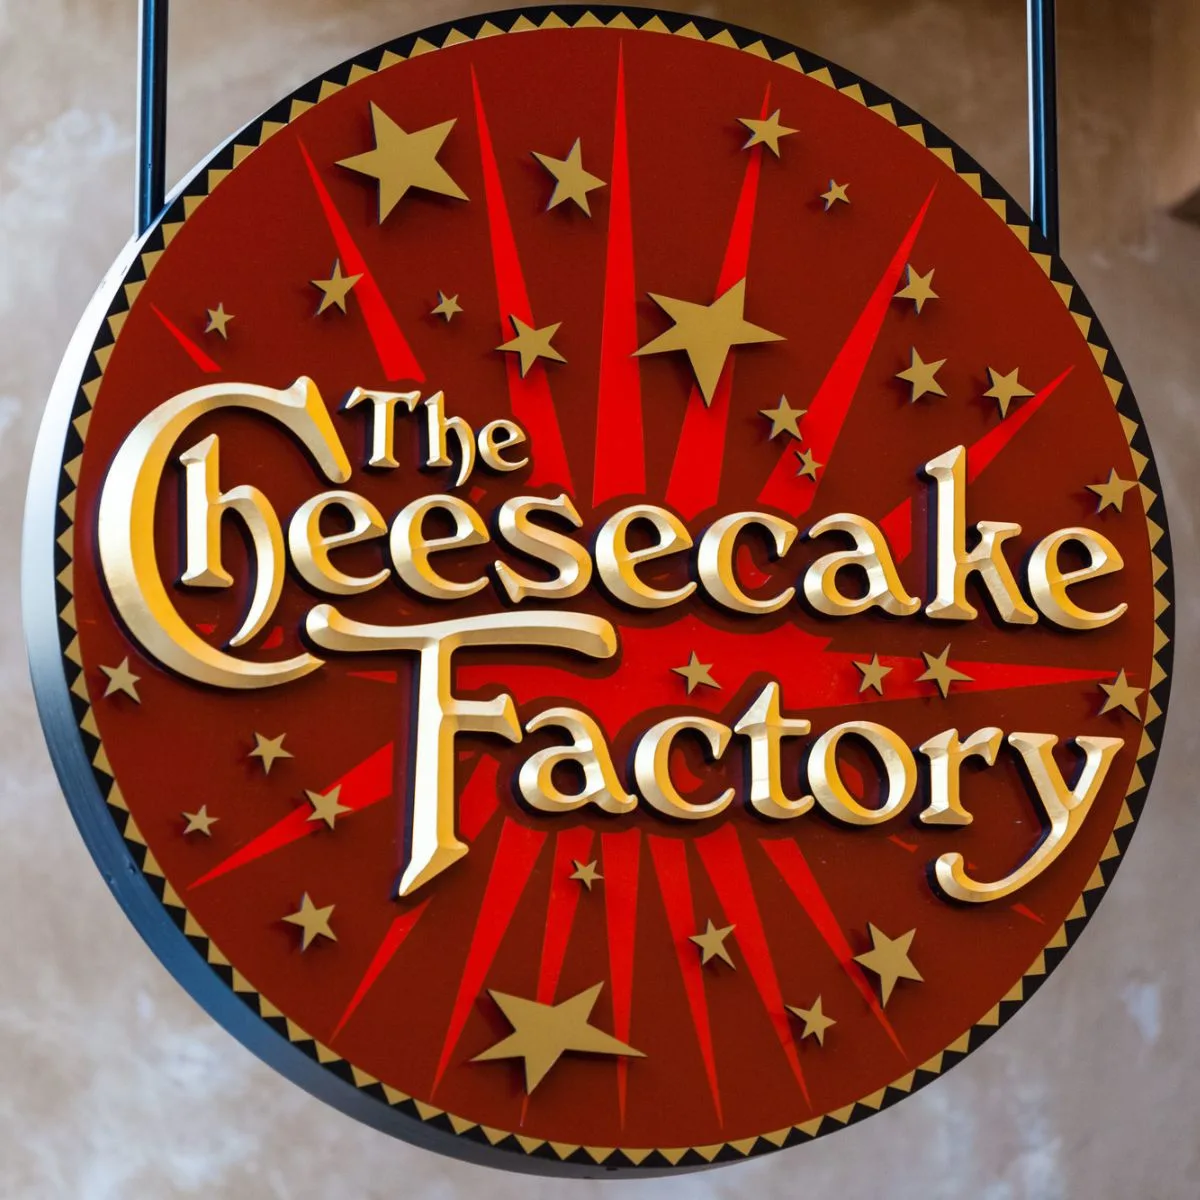 Circular Cheesecake Factory Sign.